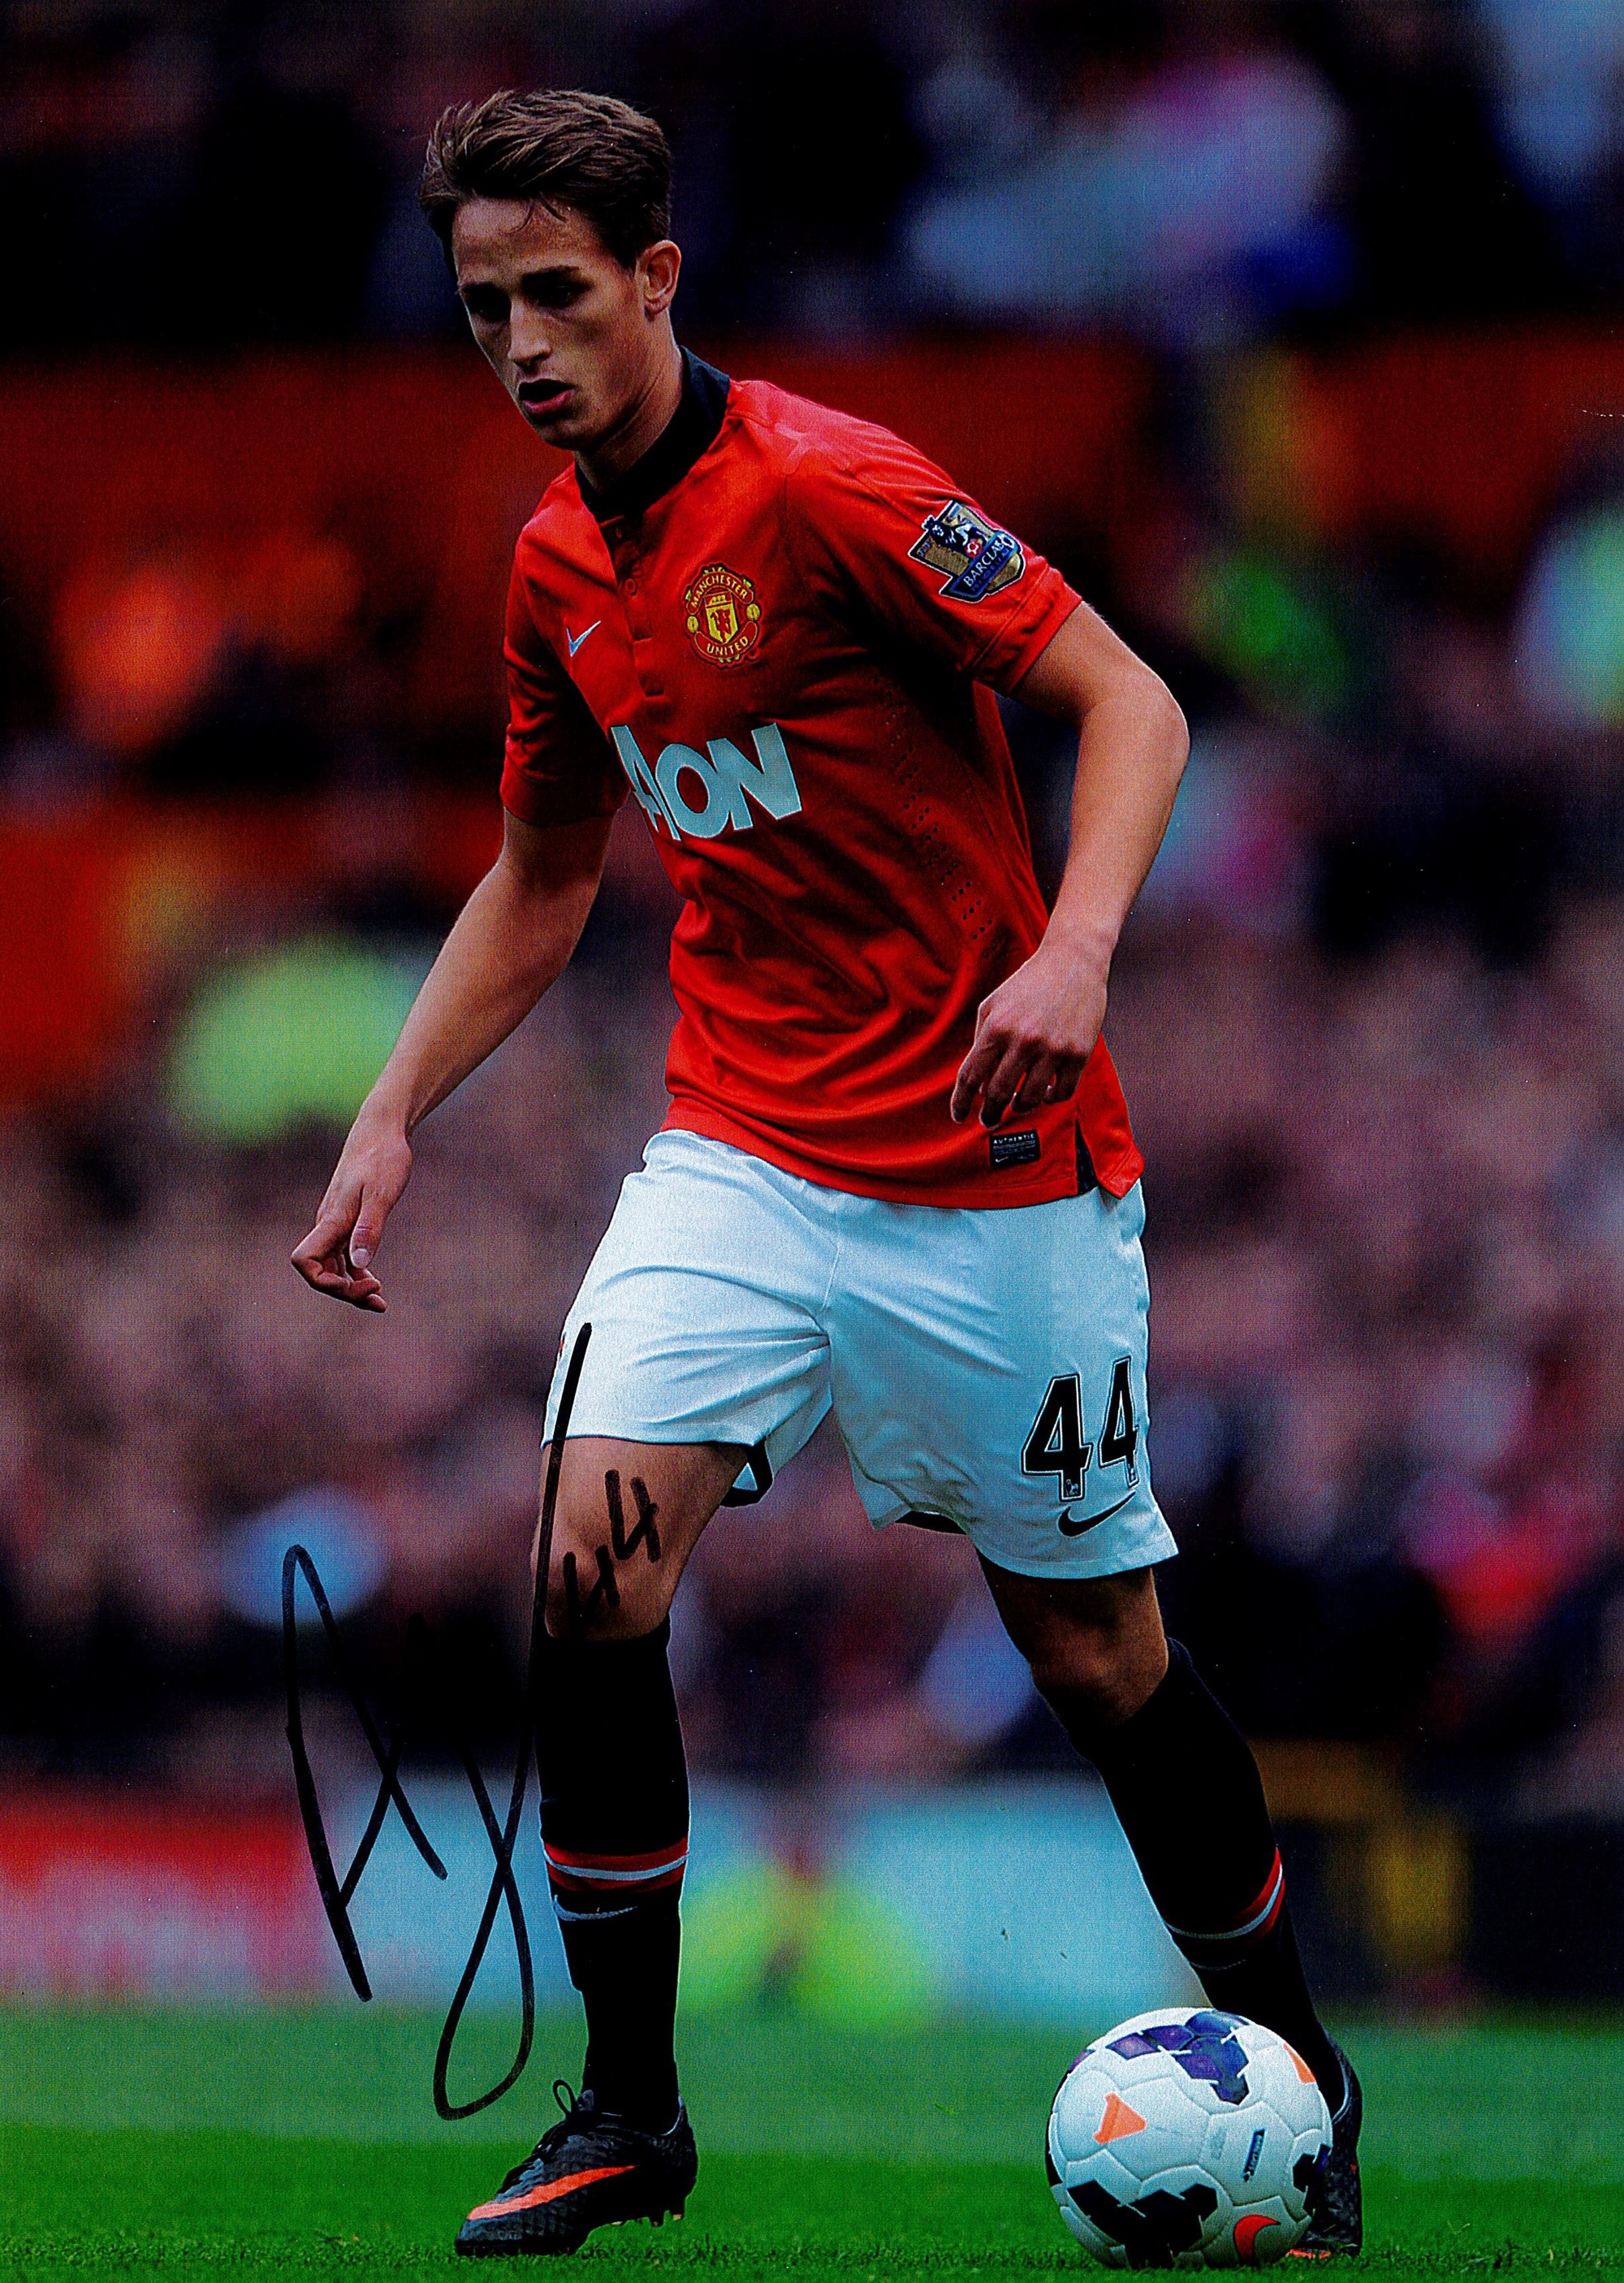 Footballer Adnan Januzaj Manchester United 12x8 coloured signed photo. Januzaj made his